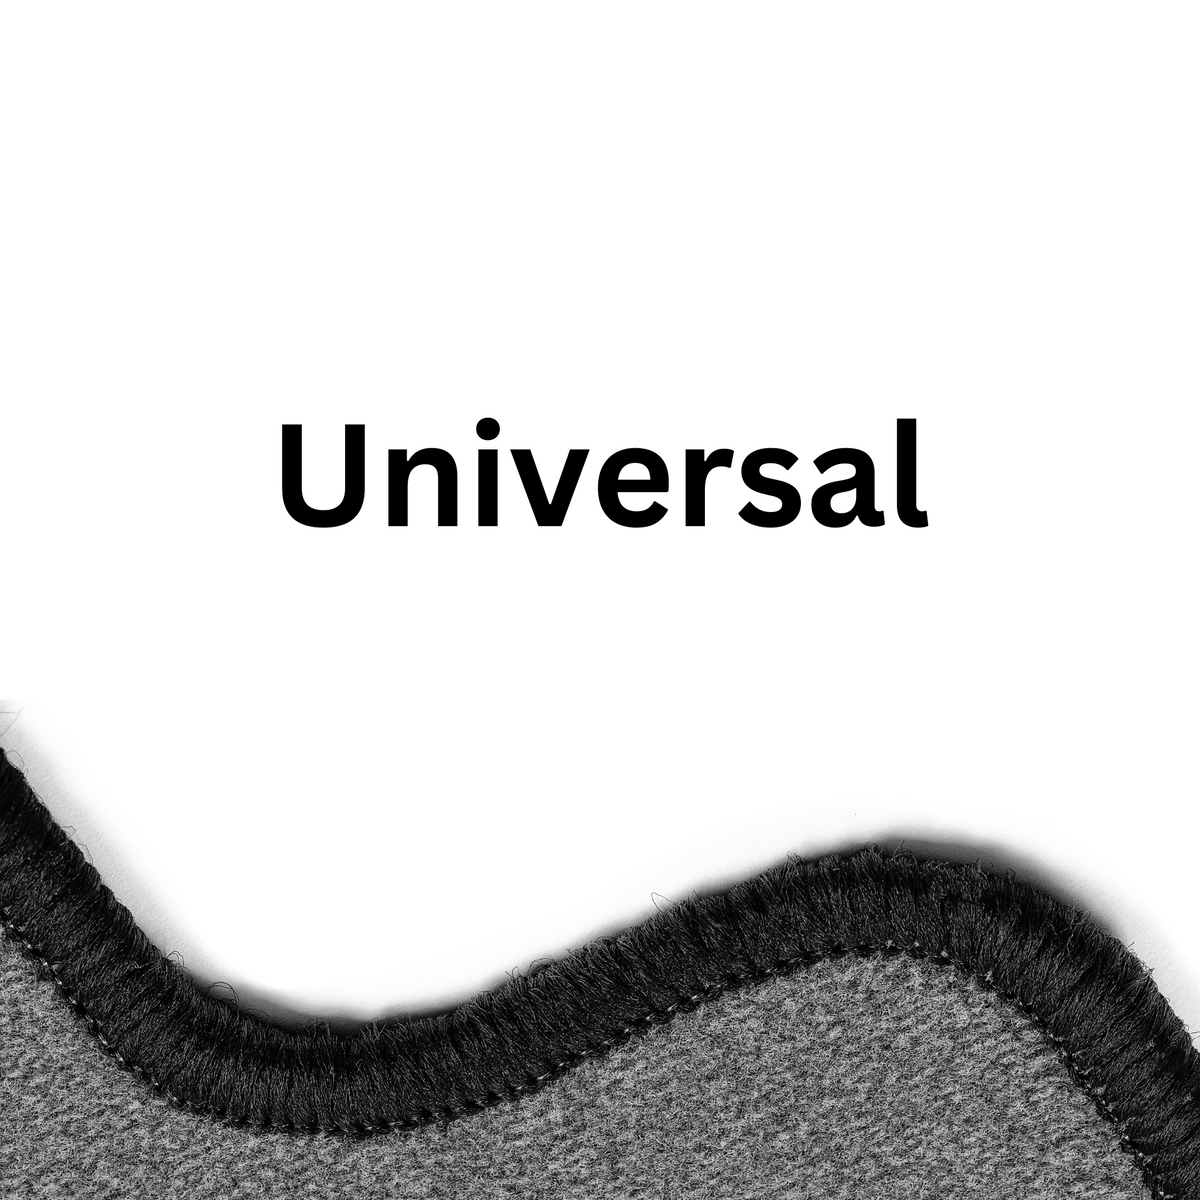 Universal Universal